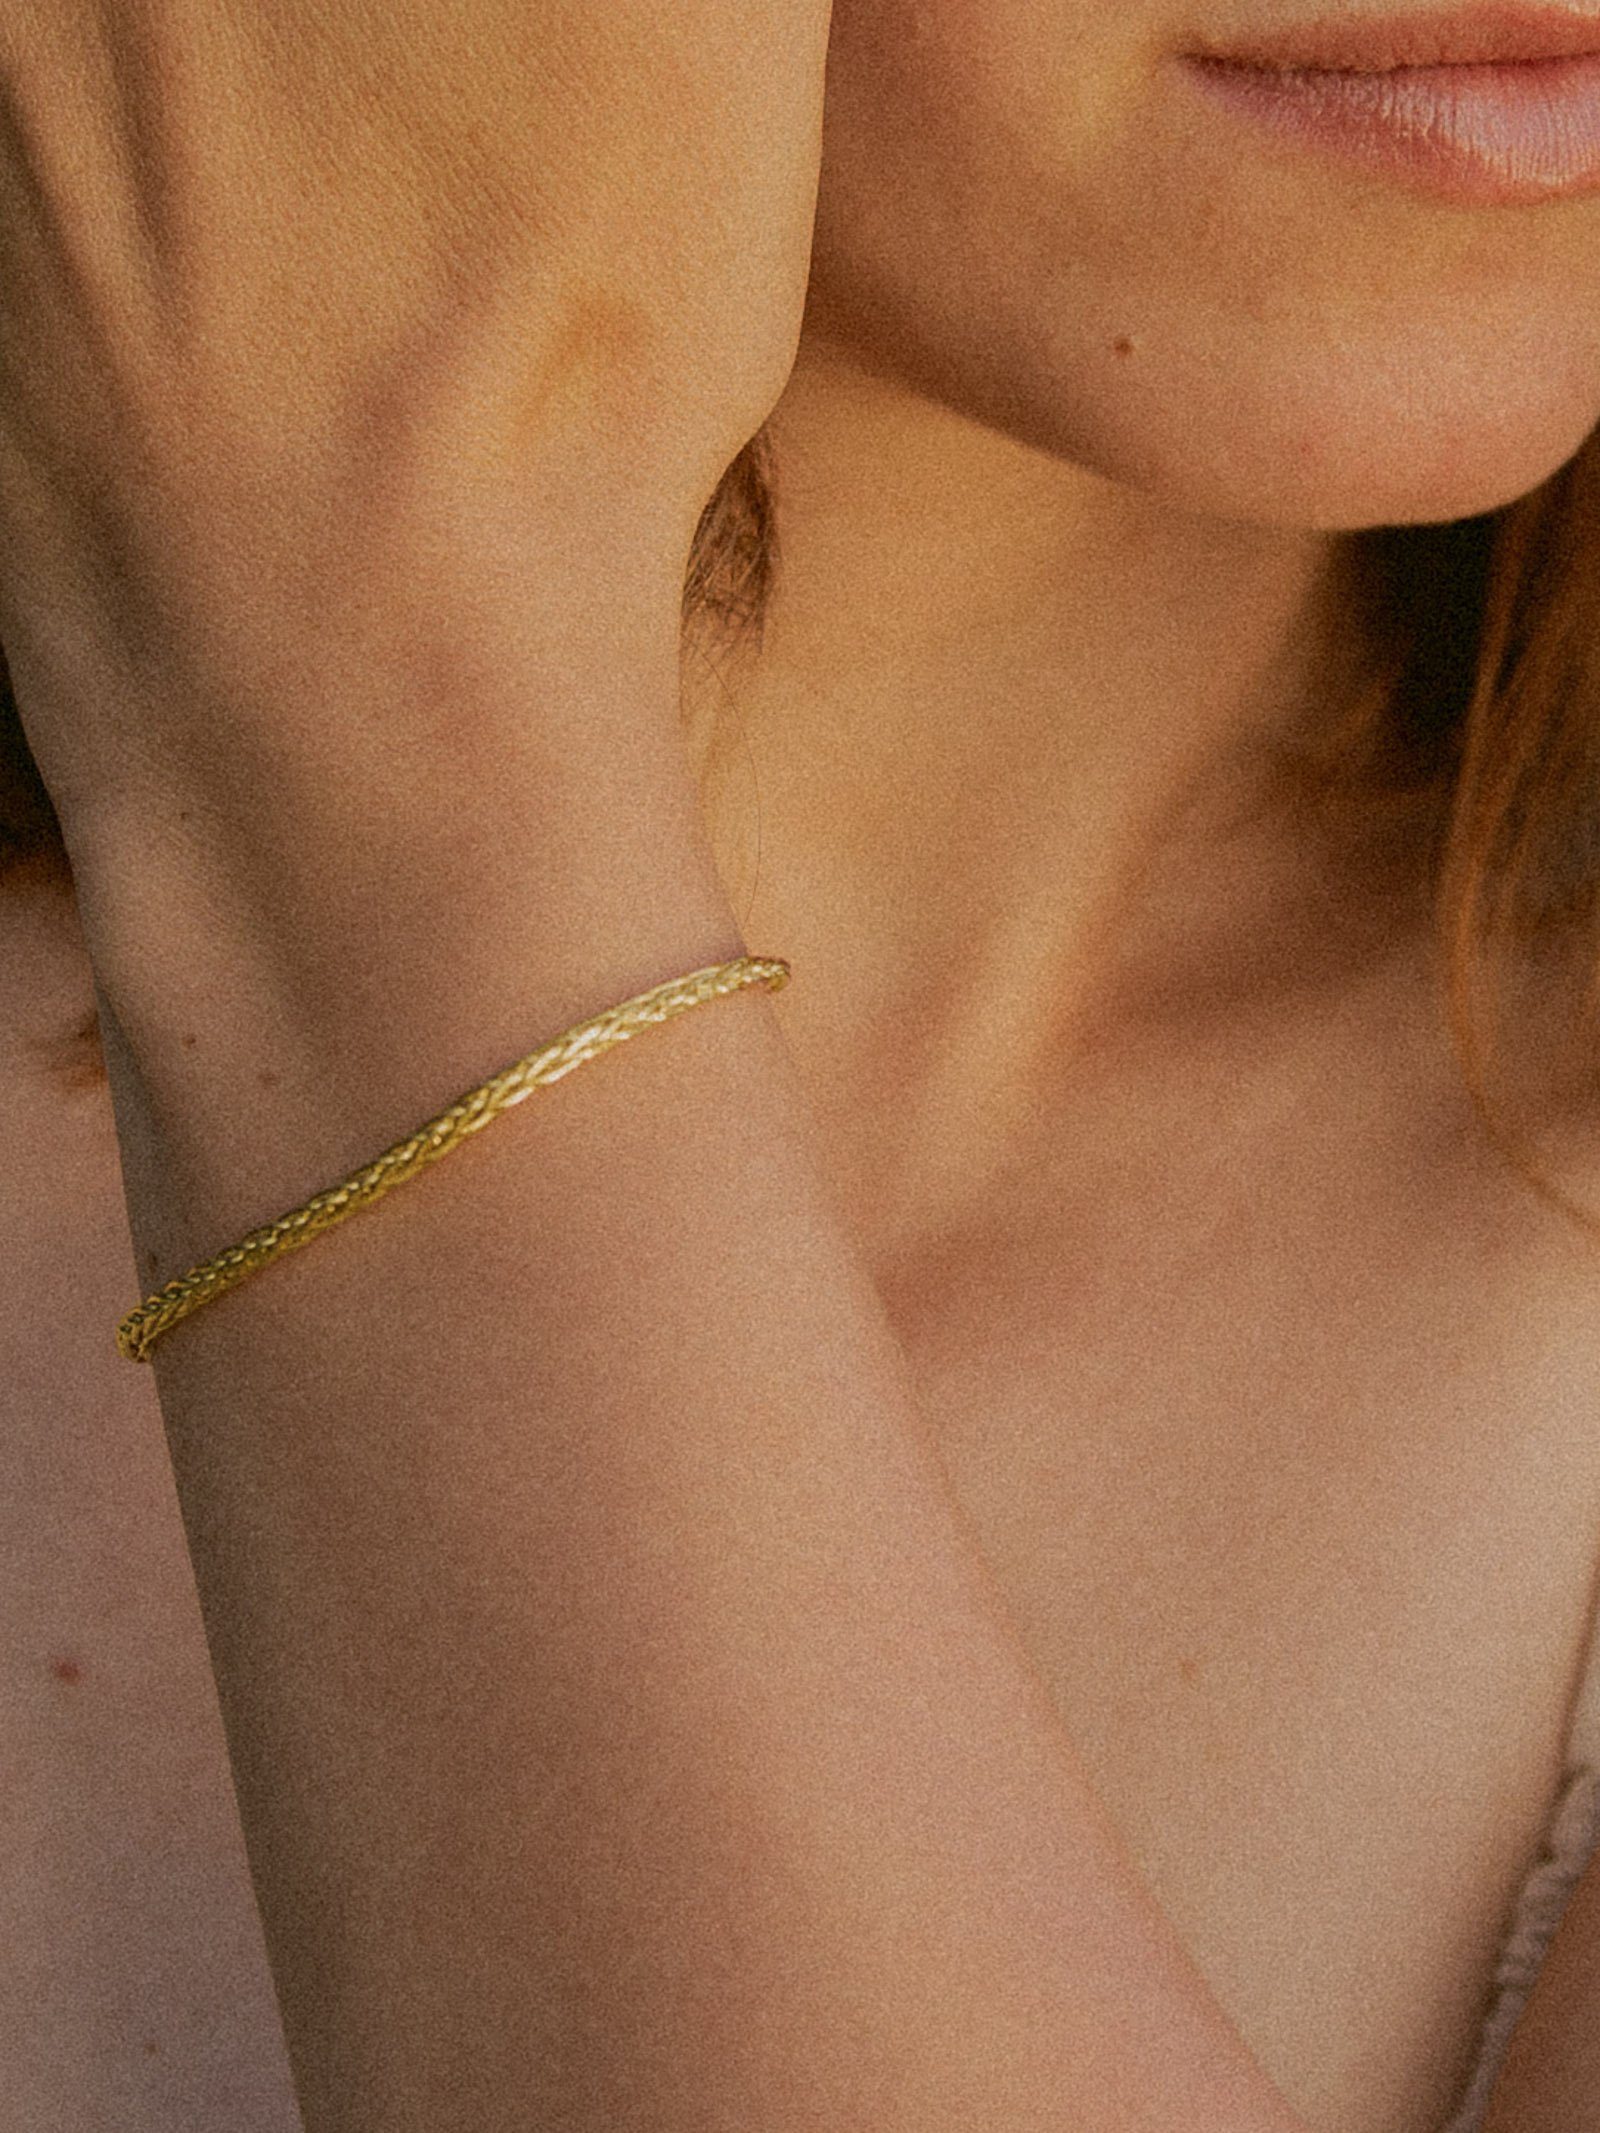 Zopfkette 2,1mm in 585 Germany Armkette, Armband Goldarmband Damen Armkettchen modabilé Made 19cm, hohl Echtgold,